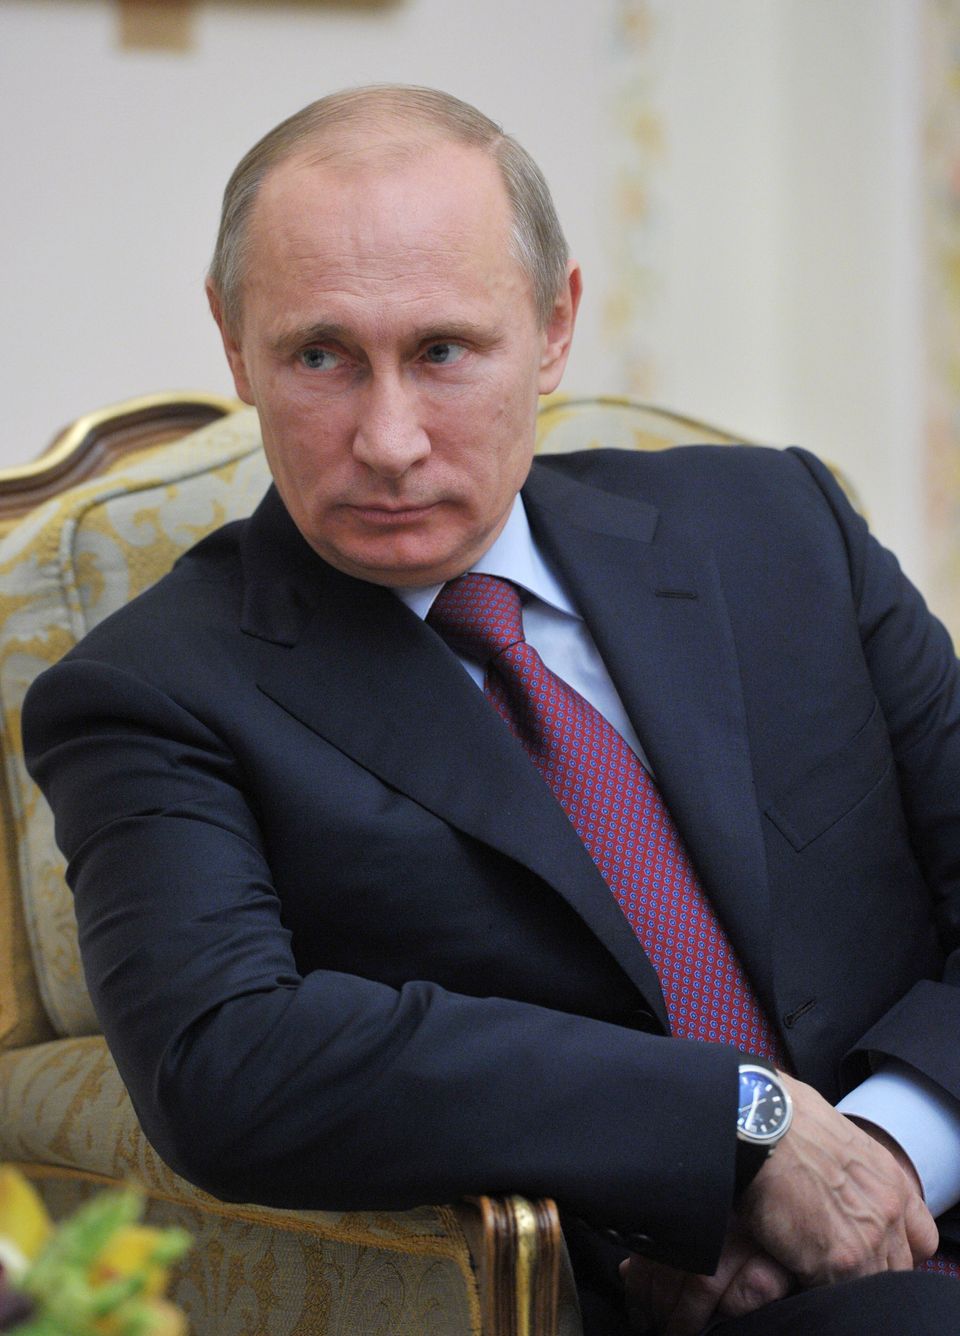 Russia's Vladimir Putin